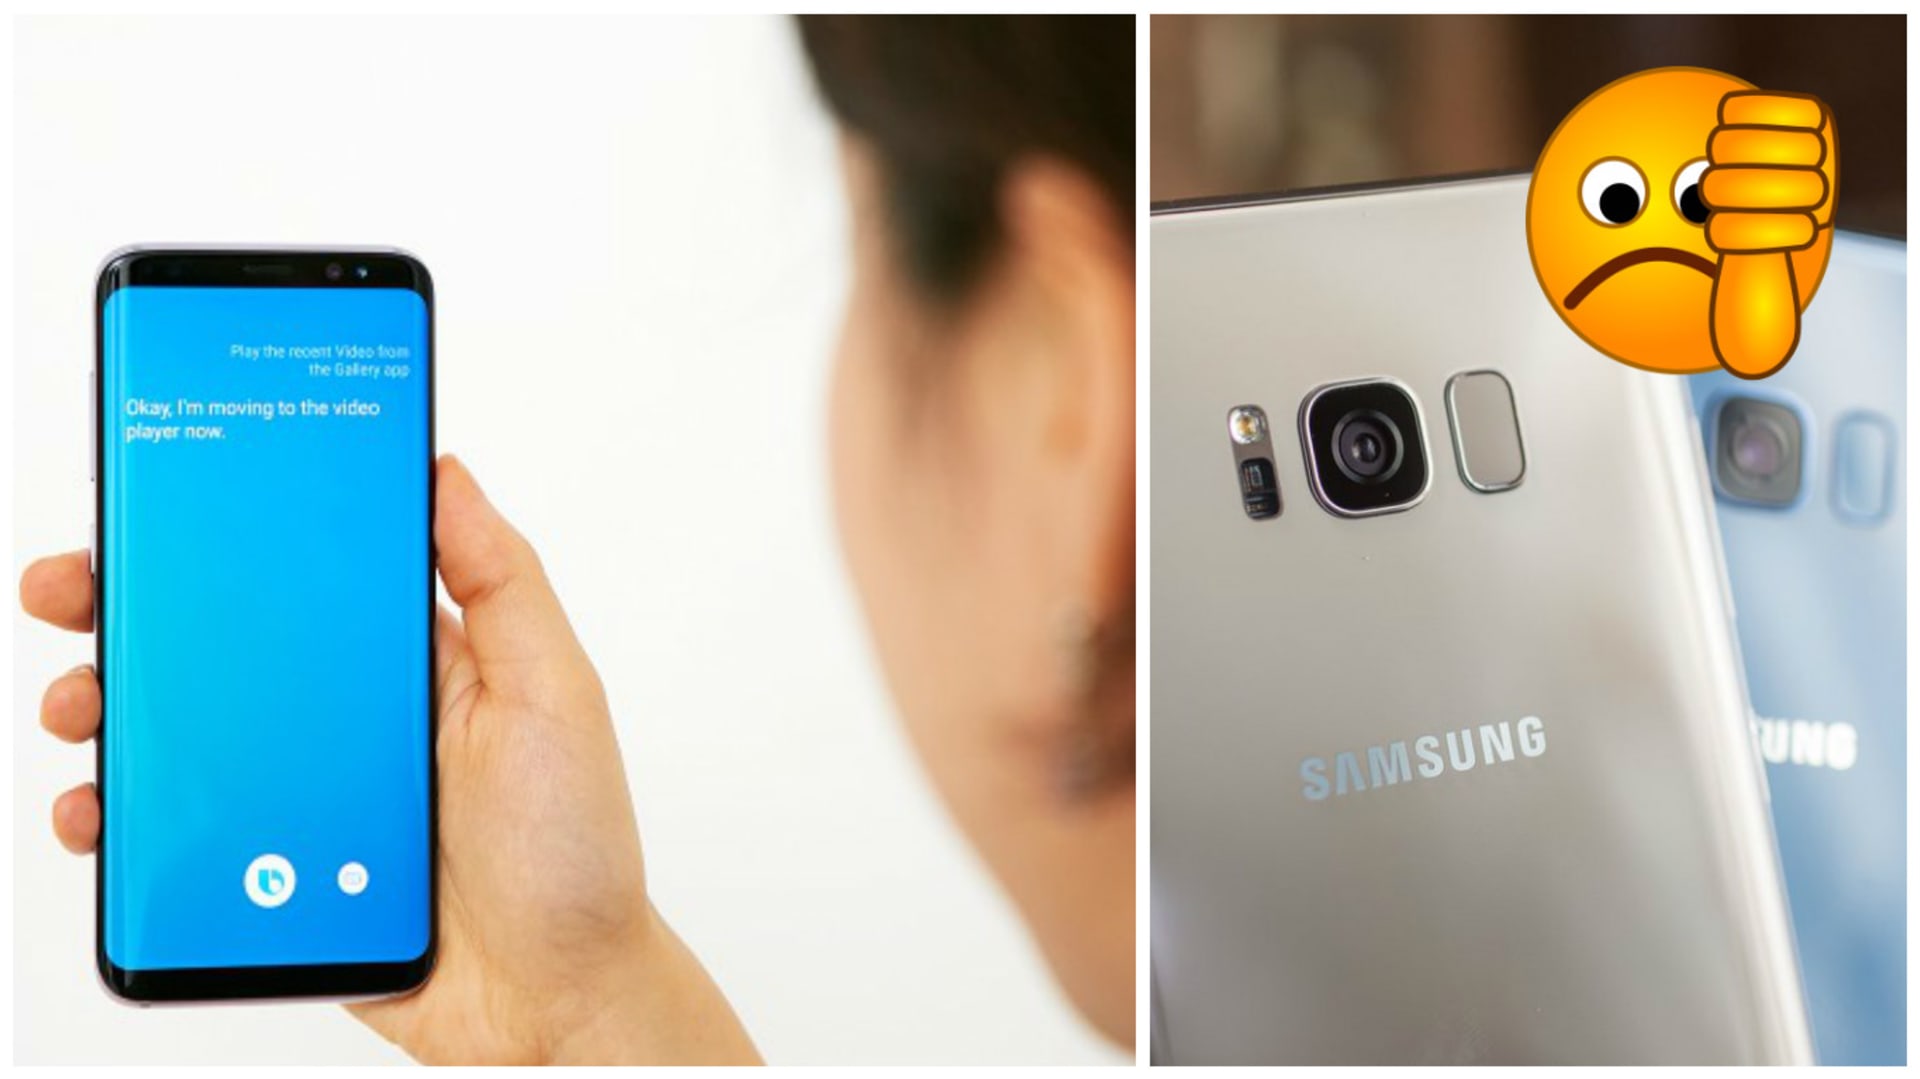 Nový Samsung Galaxy S8 se začne prodávat bez hotového asistenta Bixbyho.